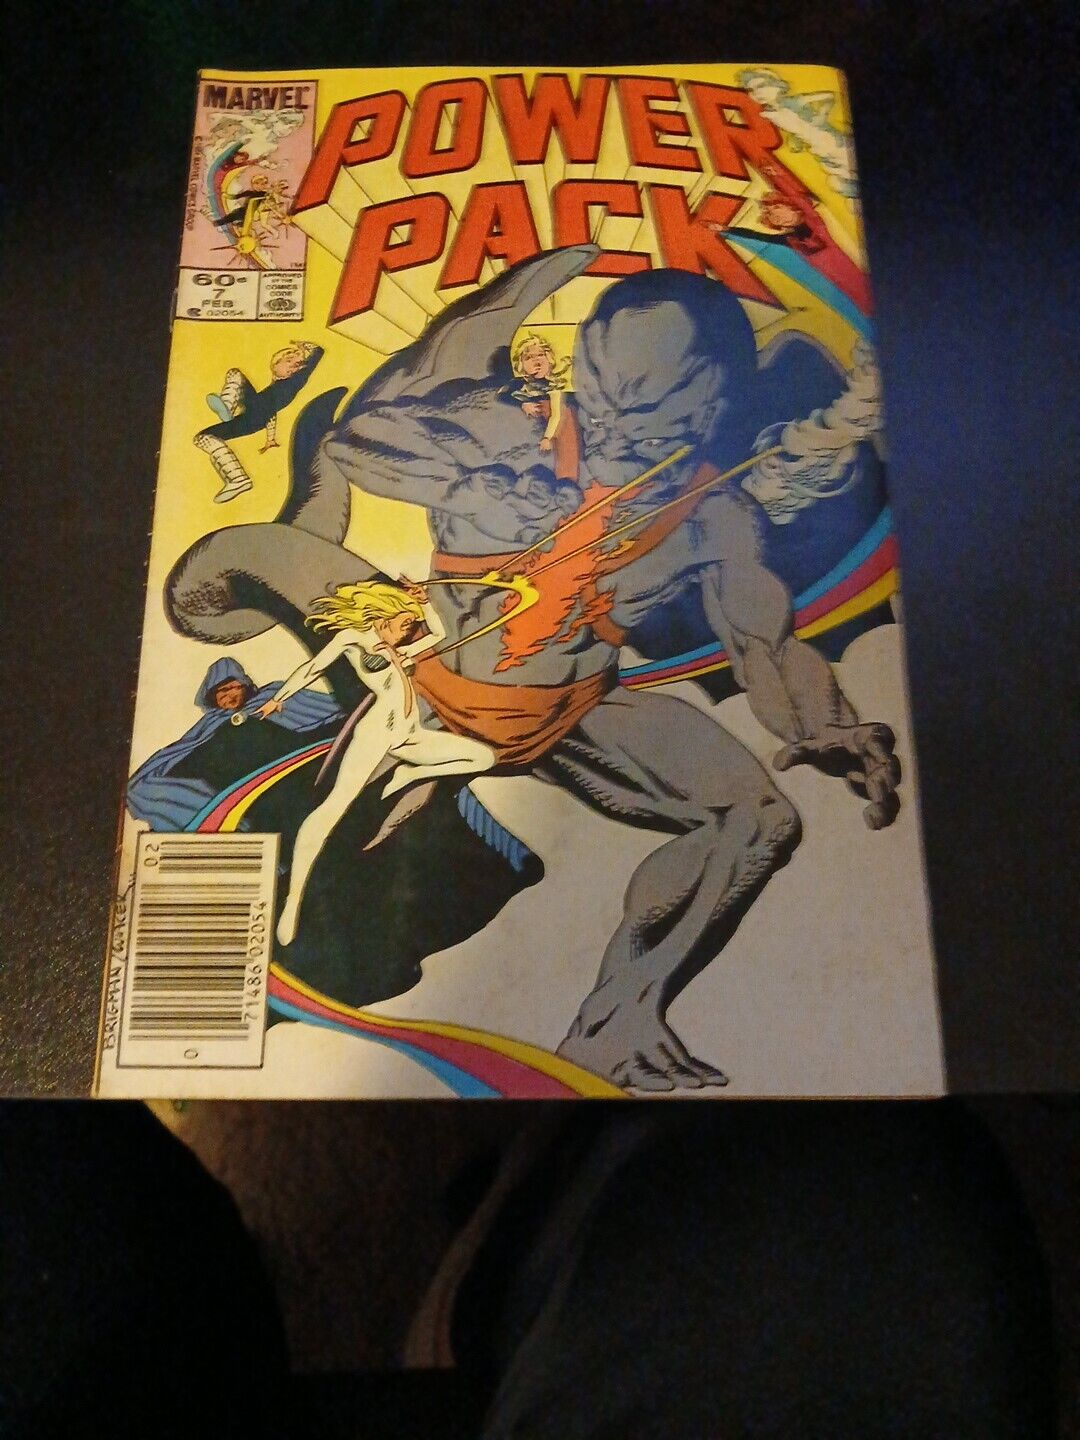 Marvel Comics Power Pack #7 February 1985 June Brigman Cover (a)